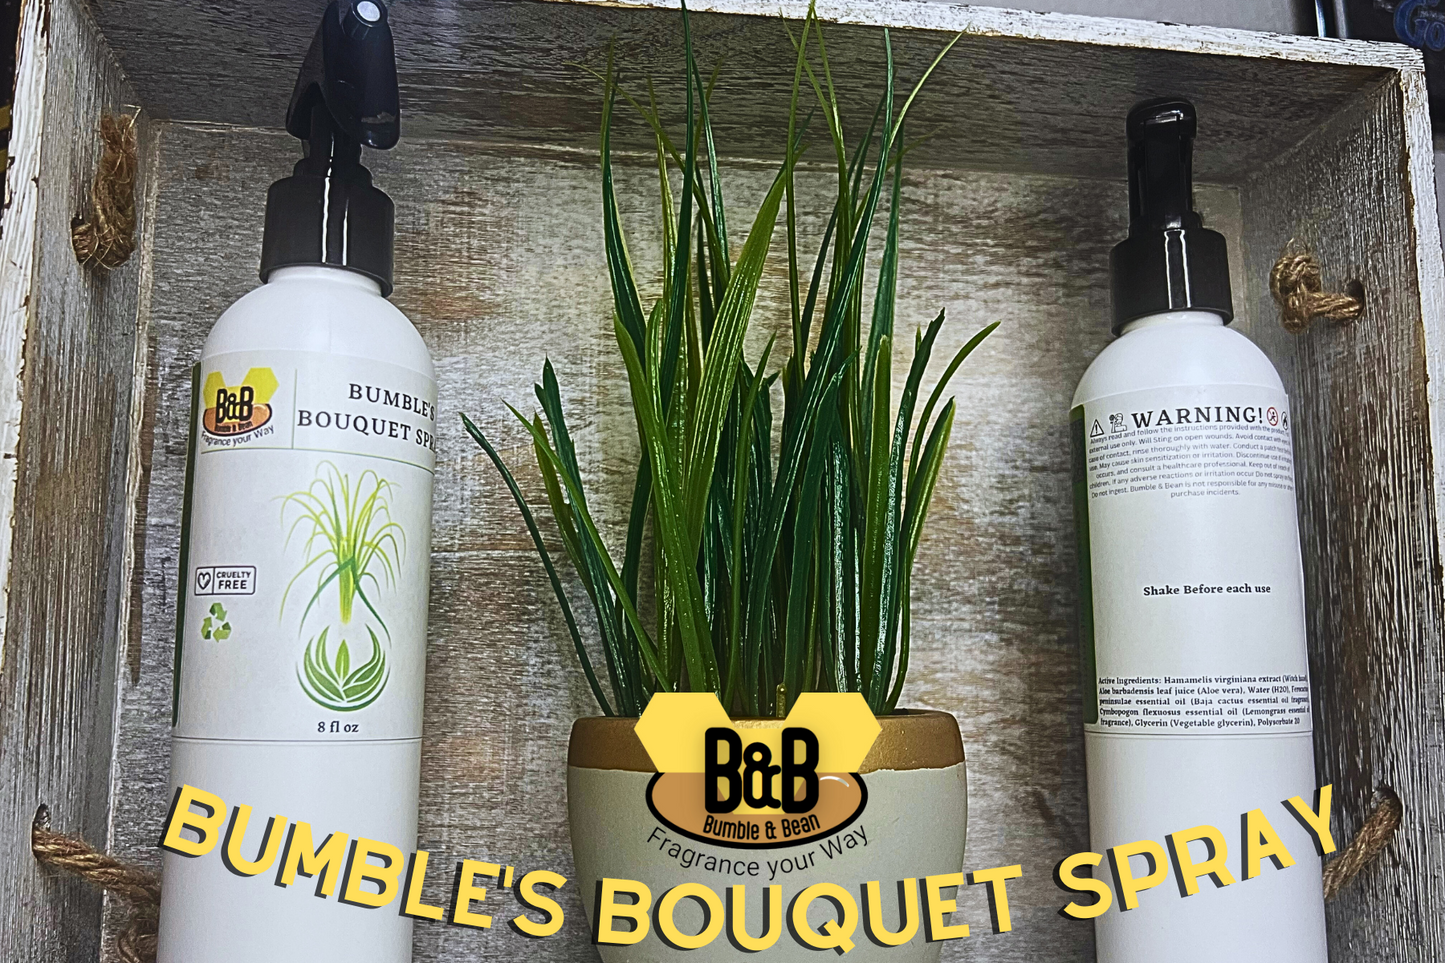 Bumble's Bouquet Spray